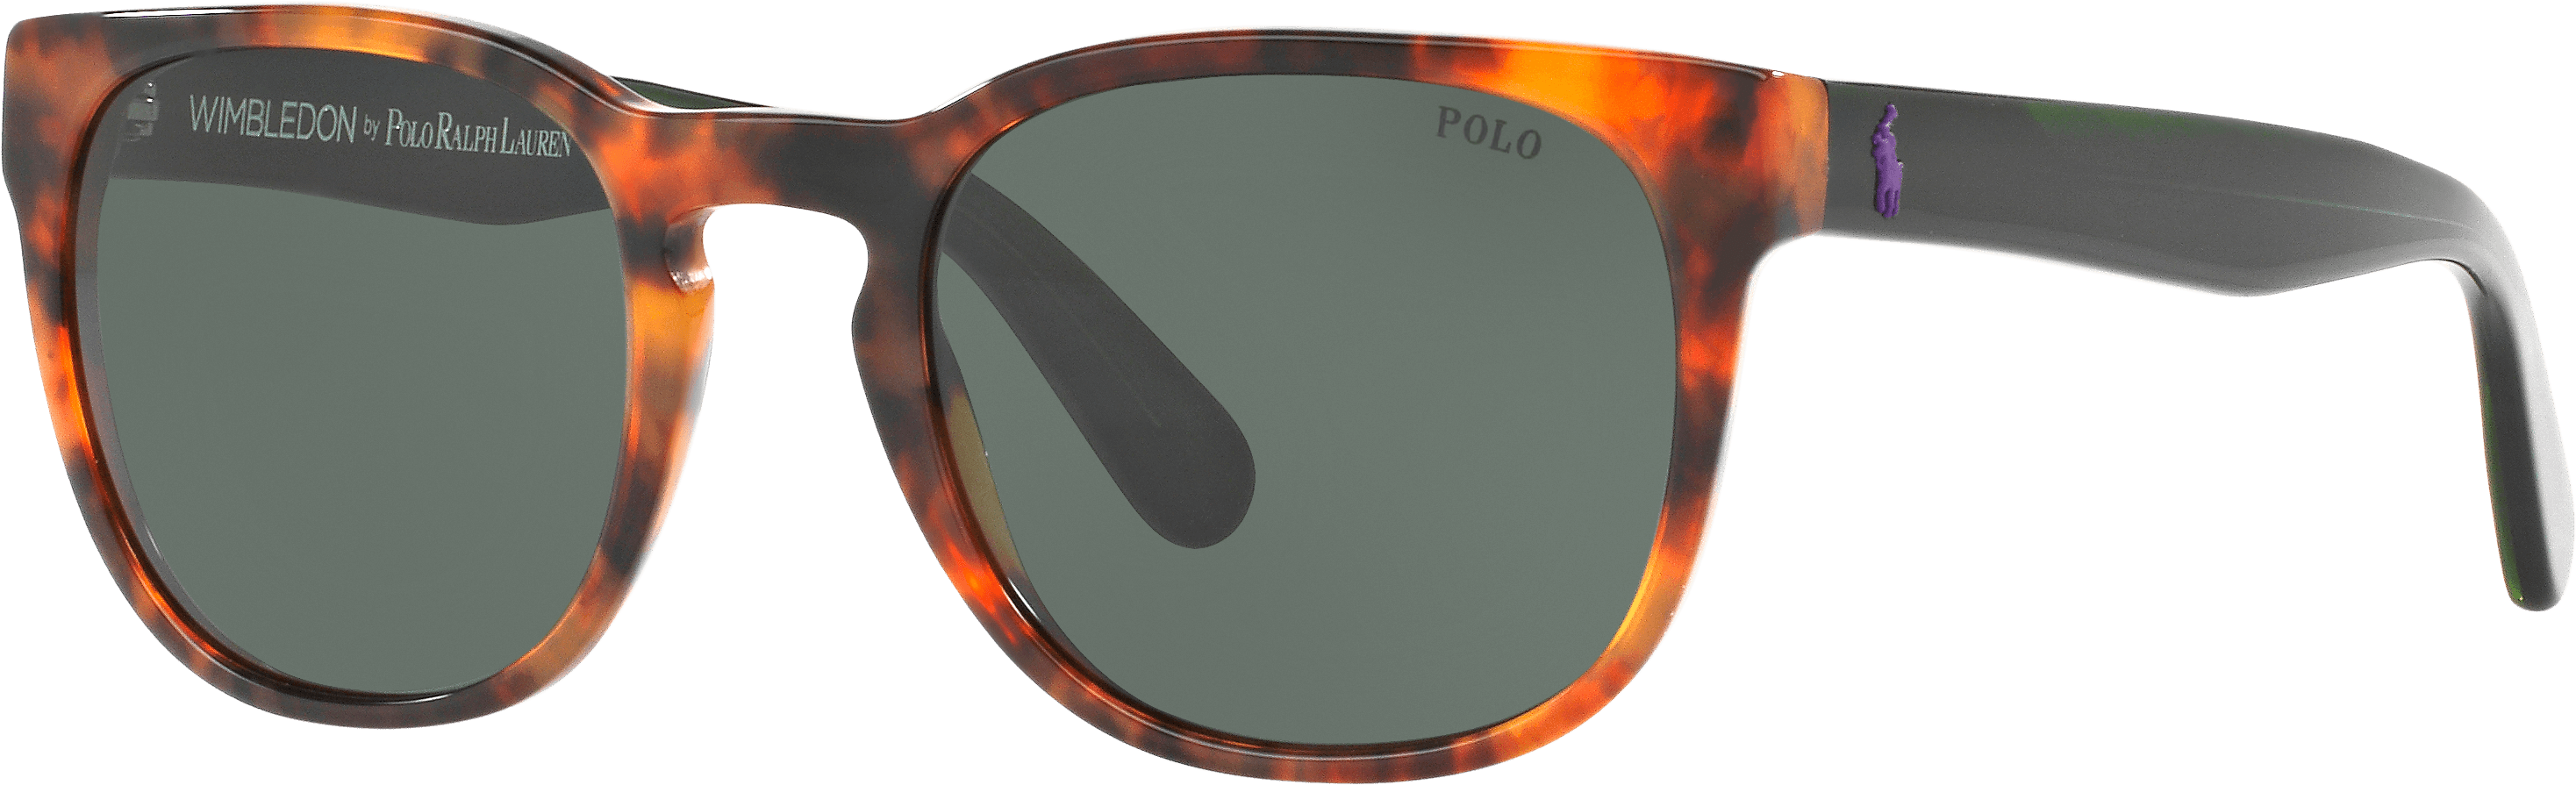 Polo Ralph Lauren Tortoiseshell Sunglasses PNG image